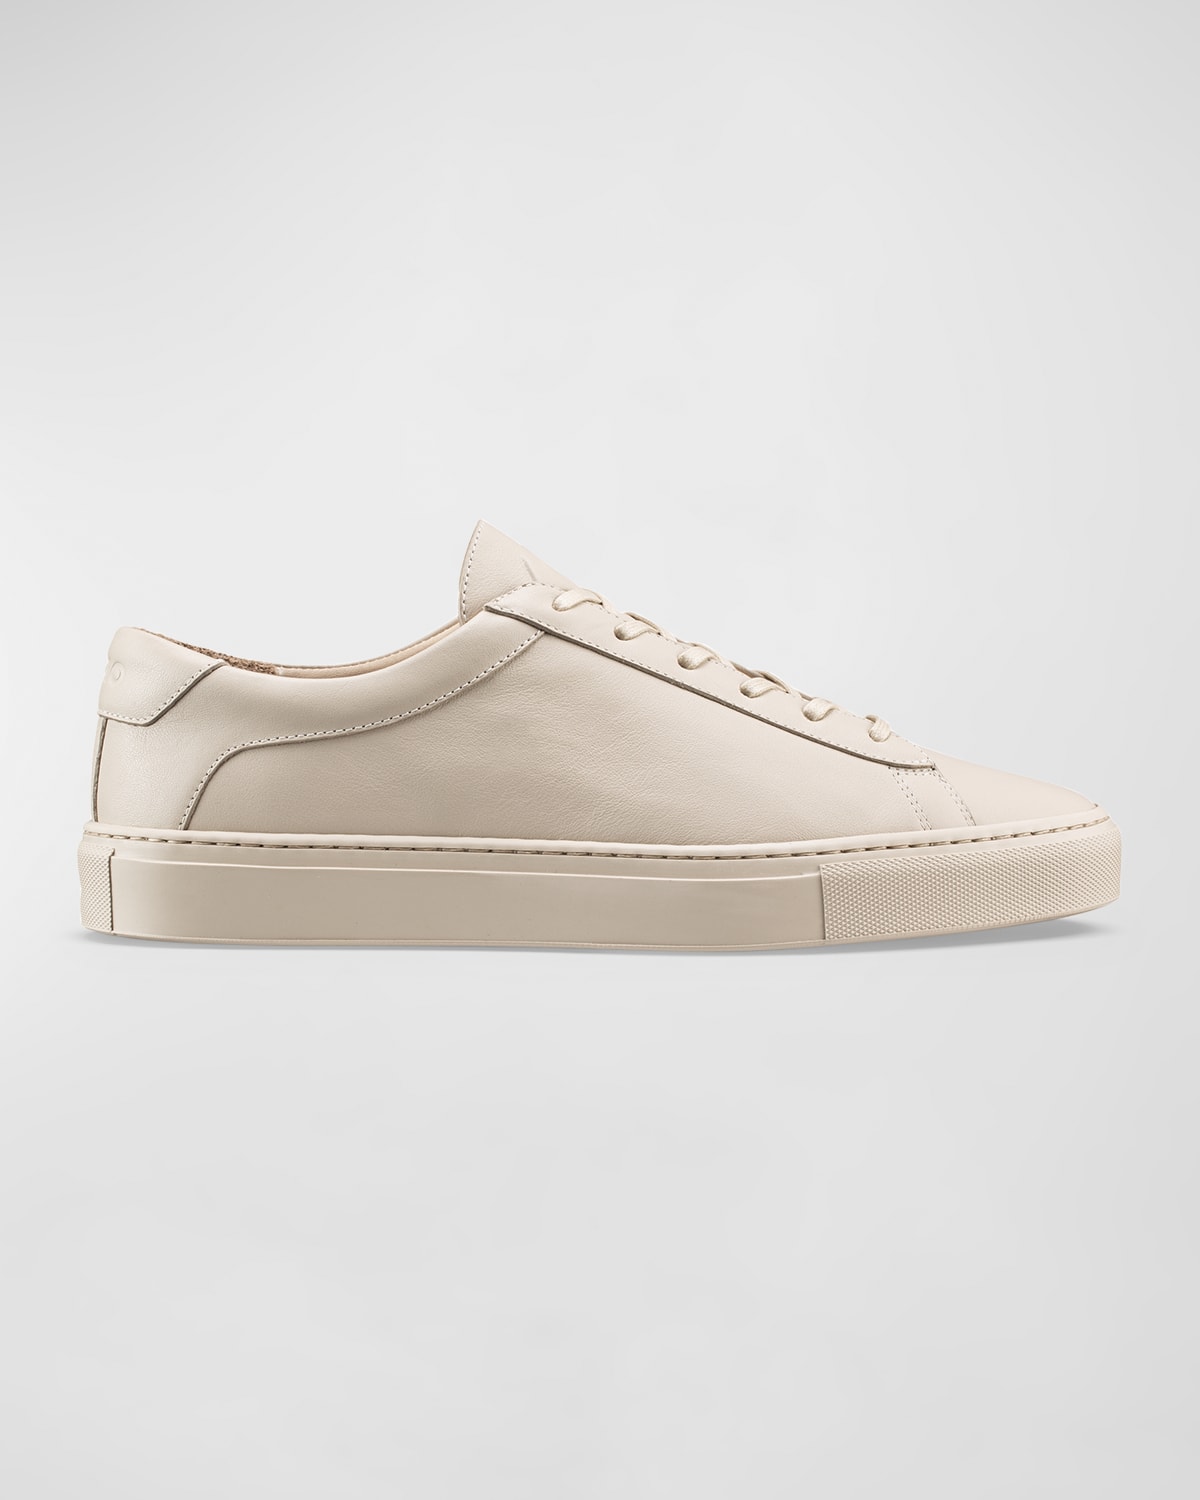 Koio Capri Mixed Leather Low-Top Sneakers | Neiman Marcus